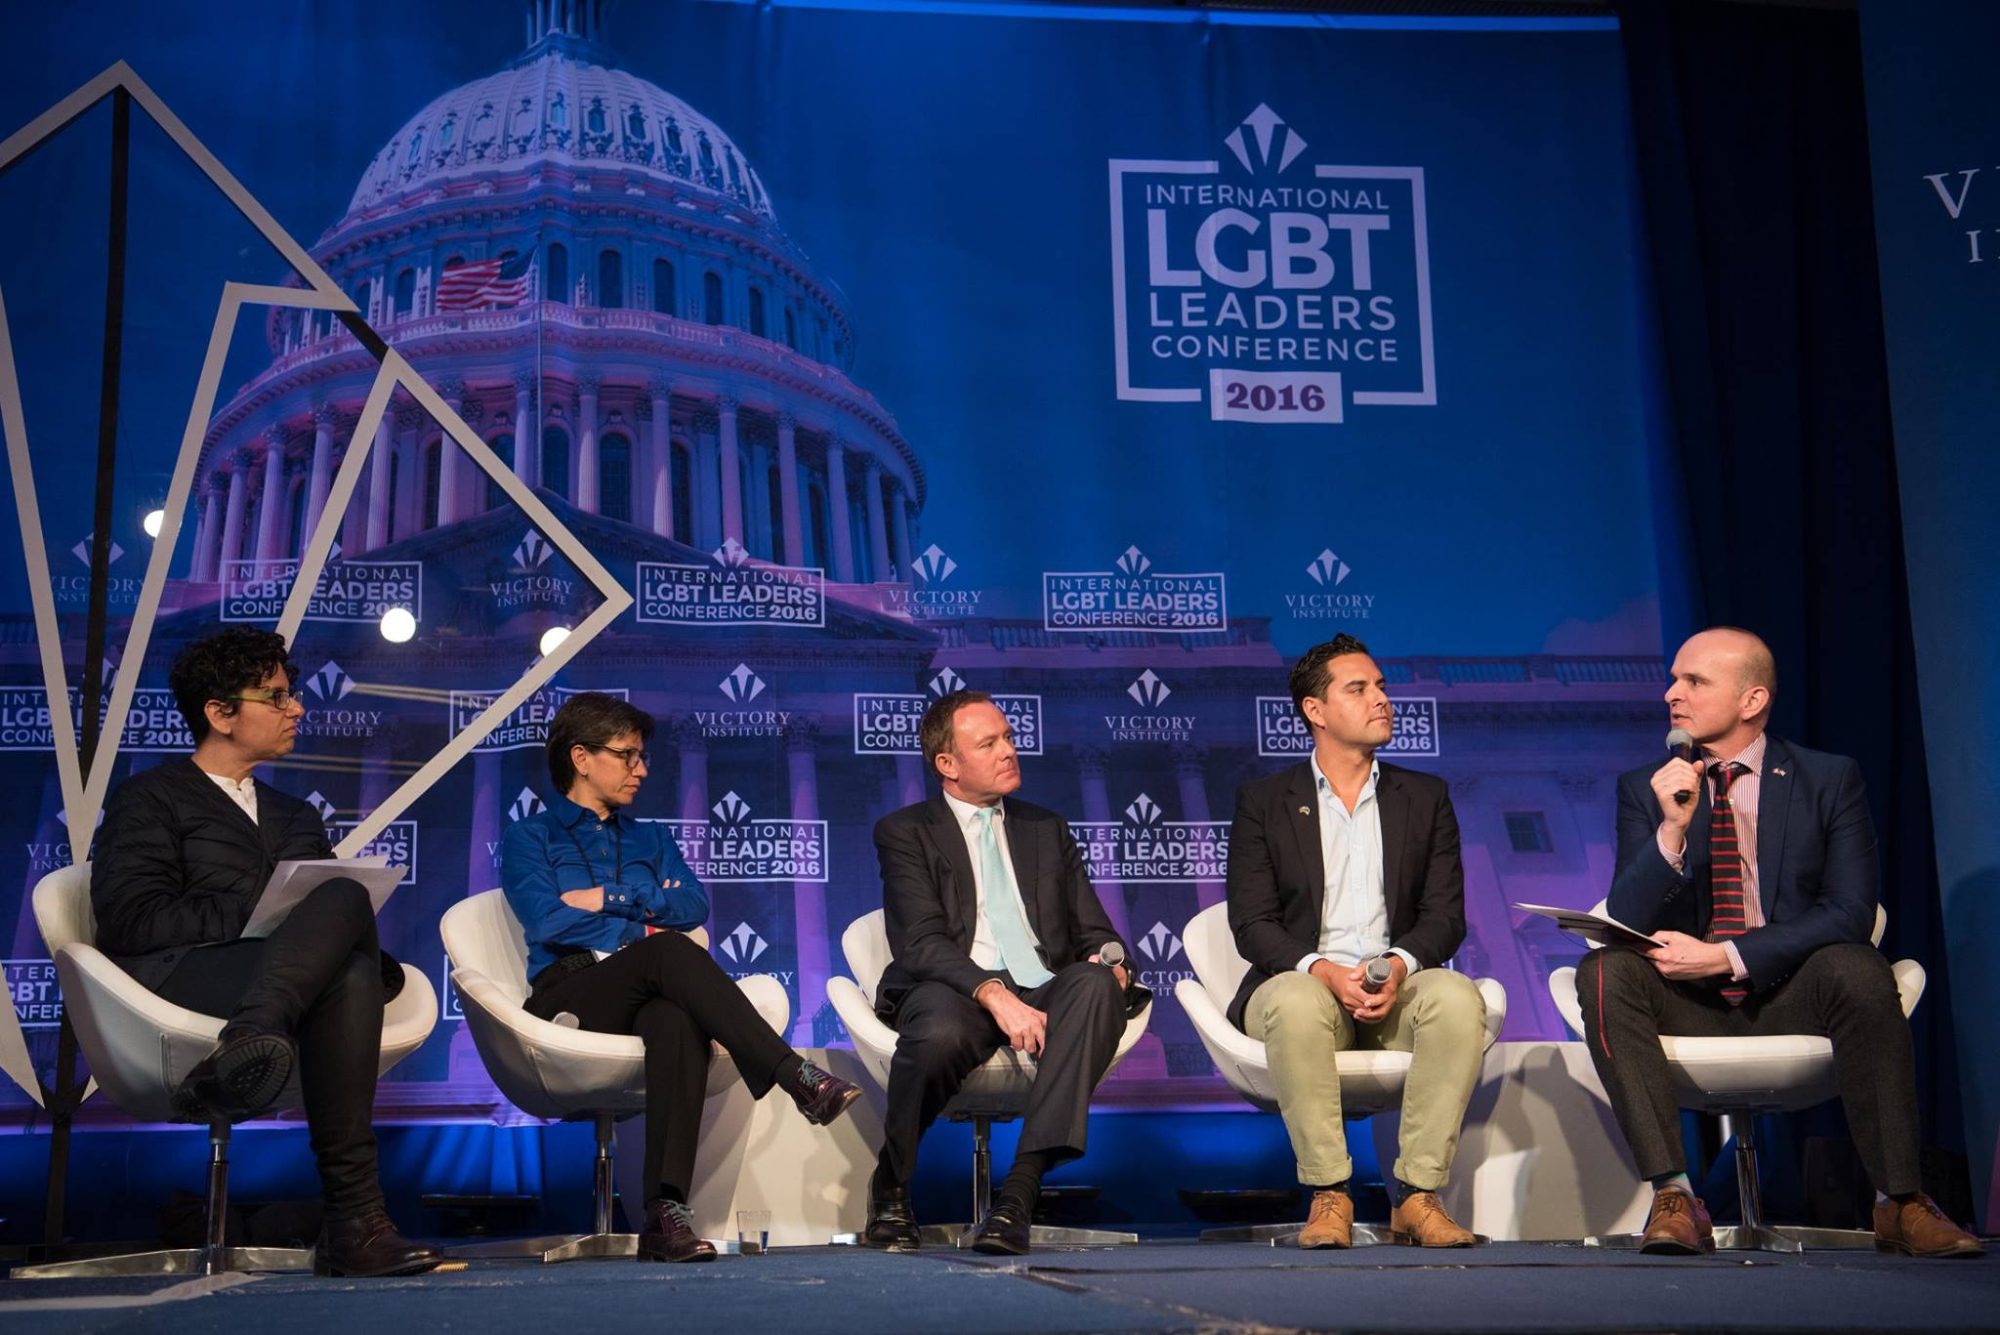 The LGBTQ+ International Conference